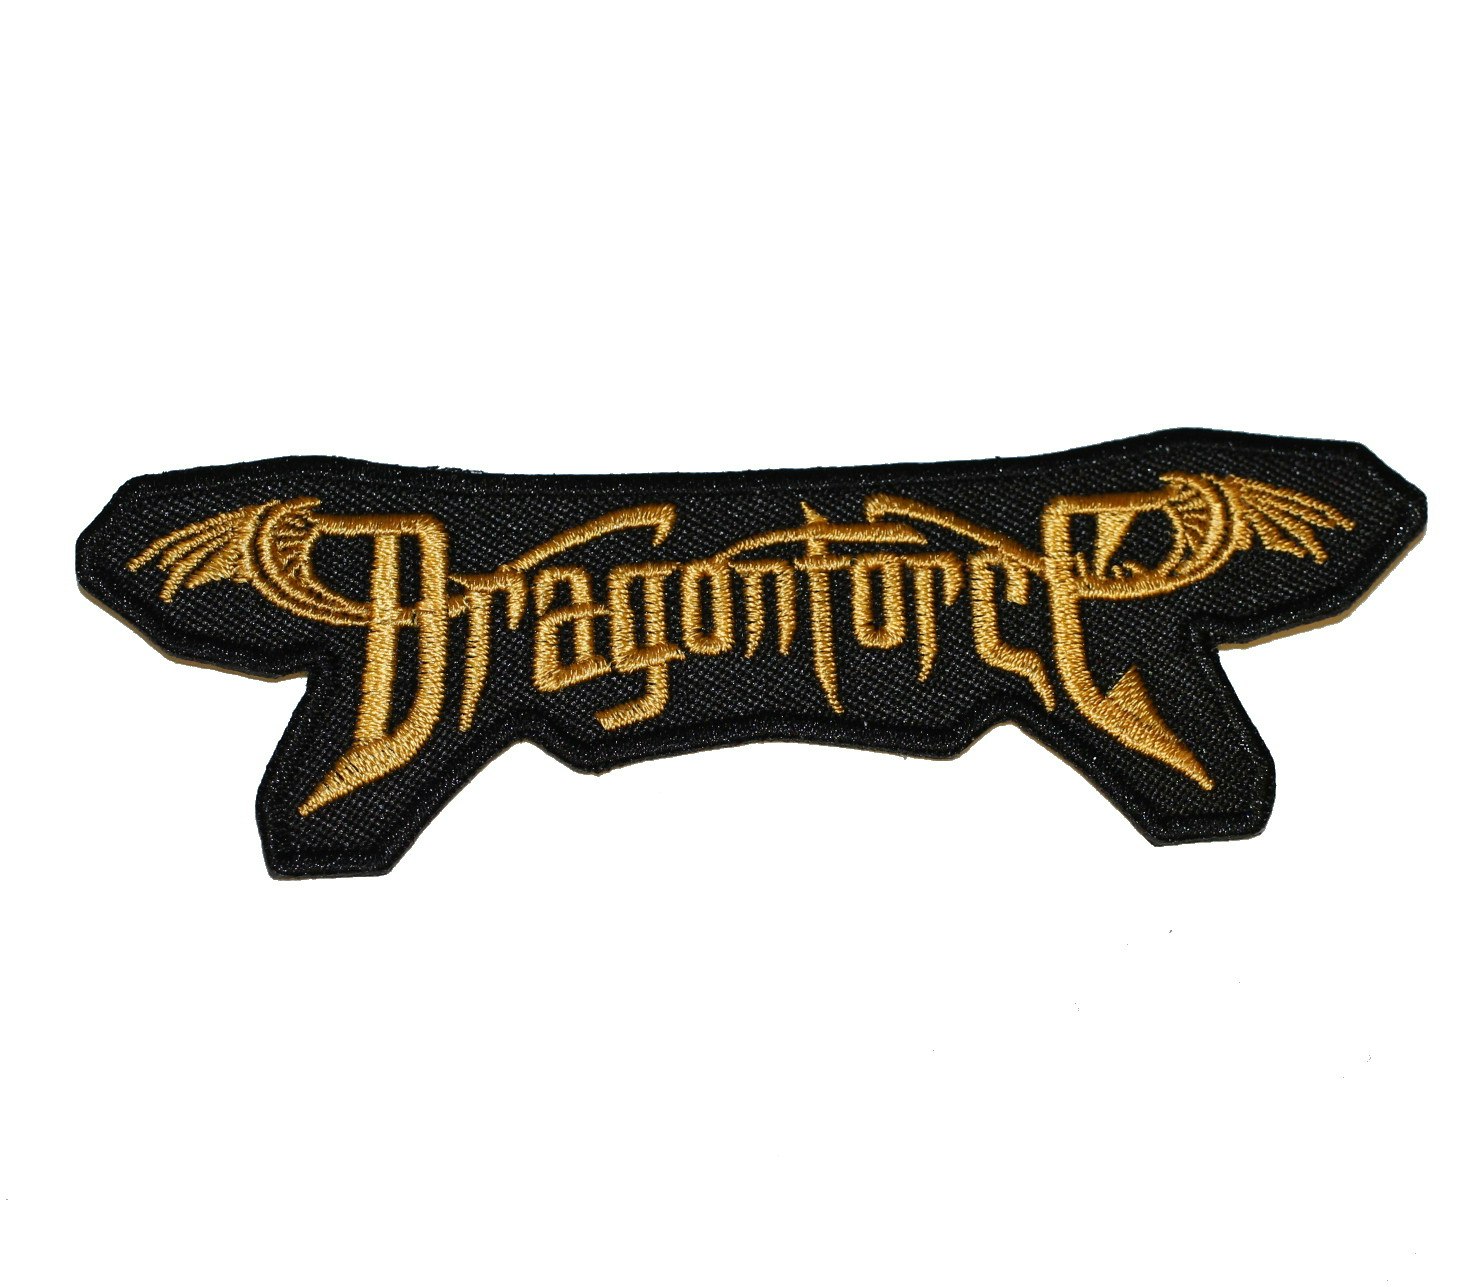 Dragonforce gold logo patch